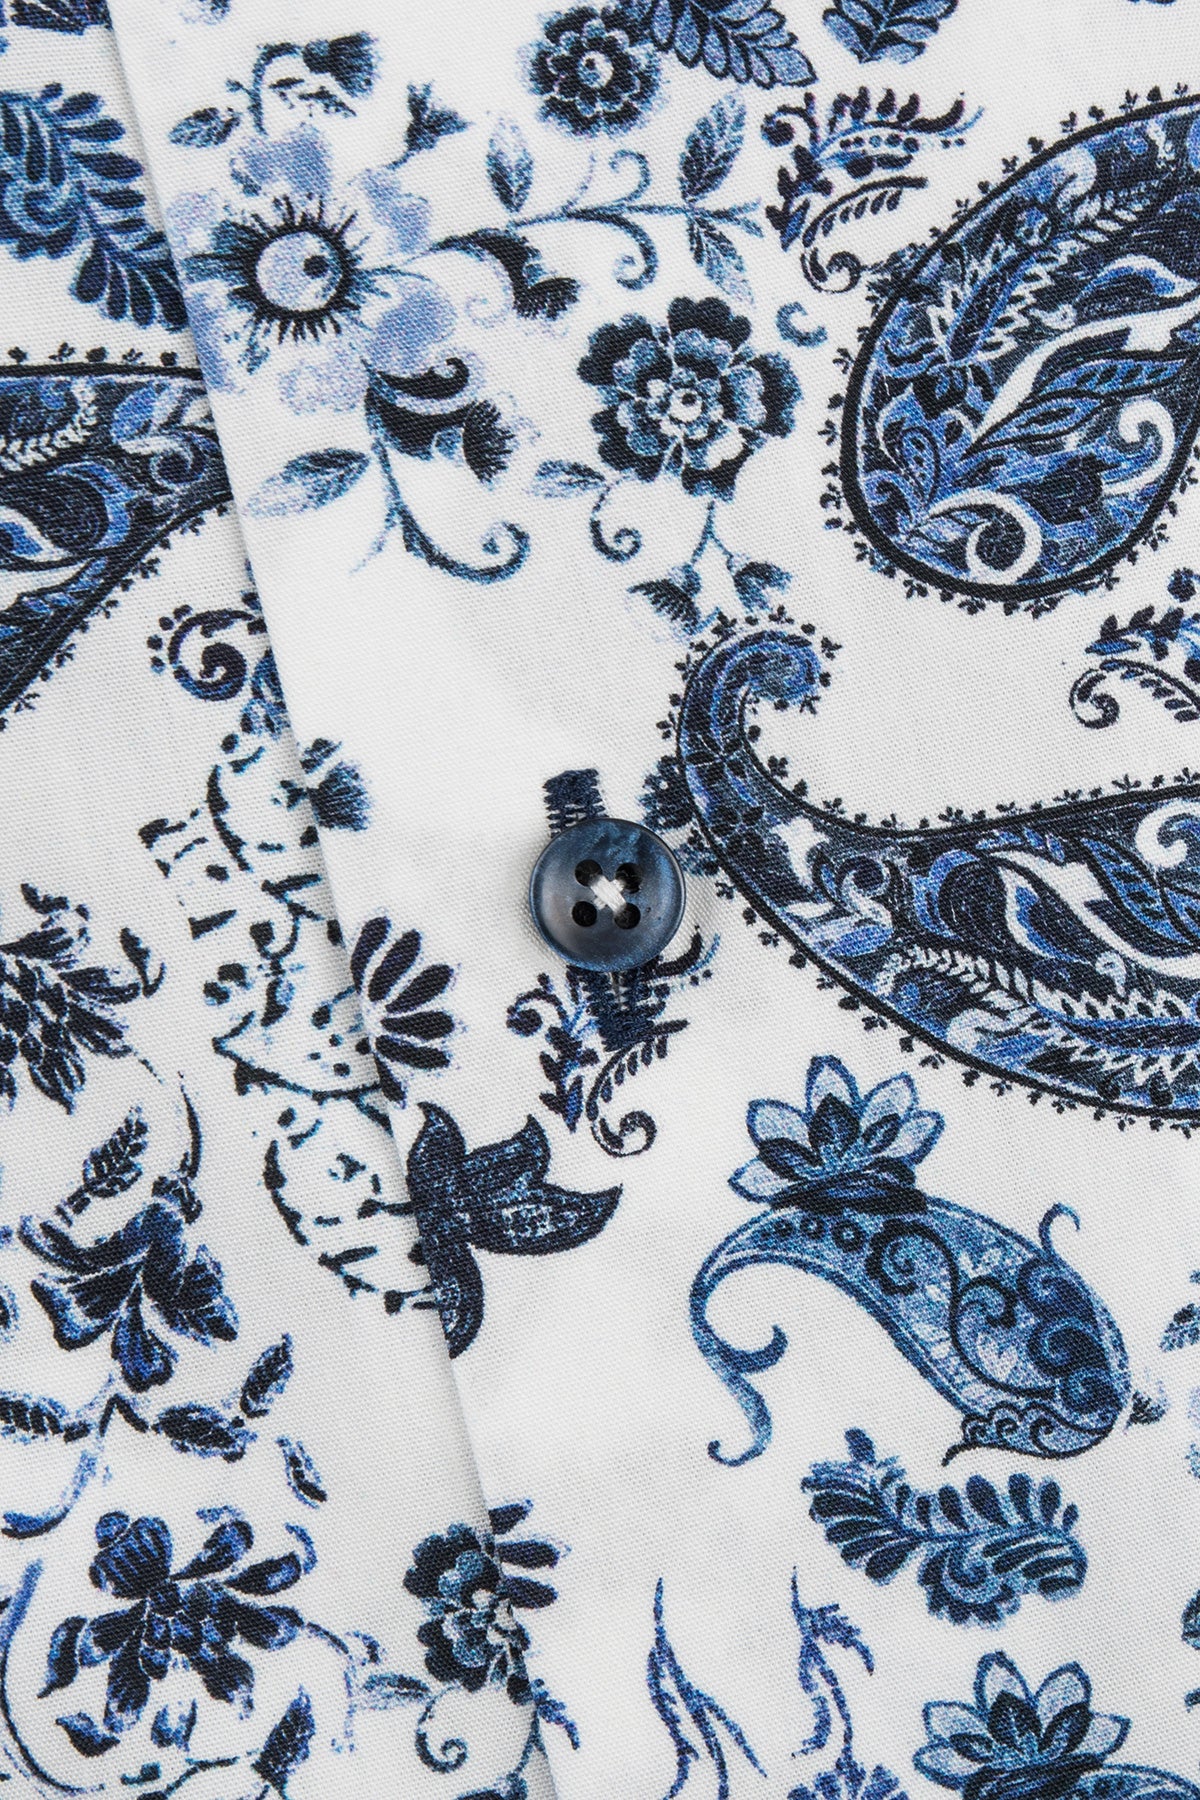 Blue paisley printed short sleeve regular fit shirt